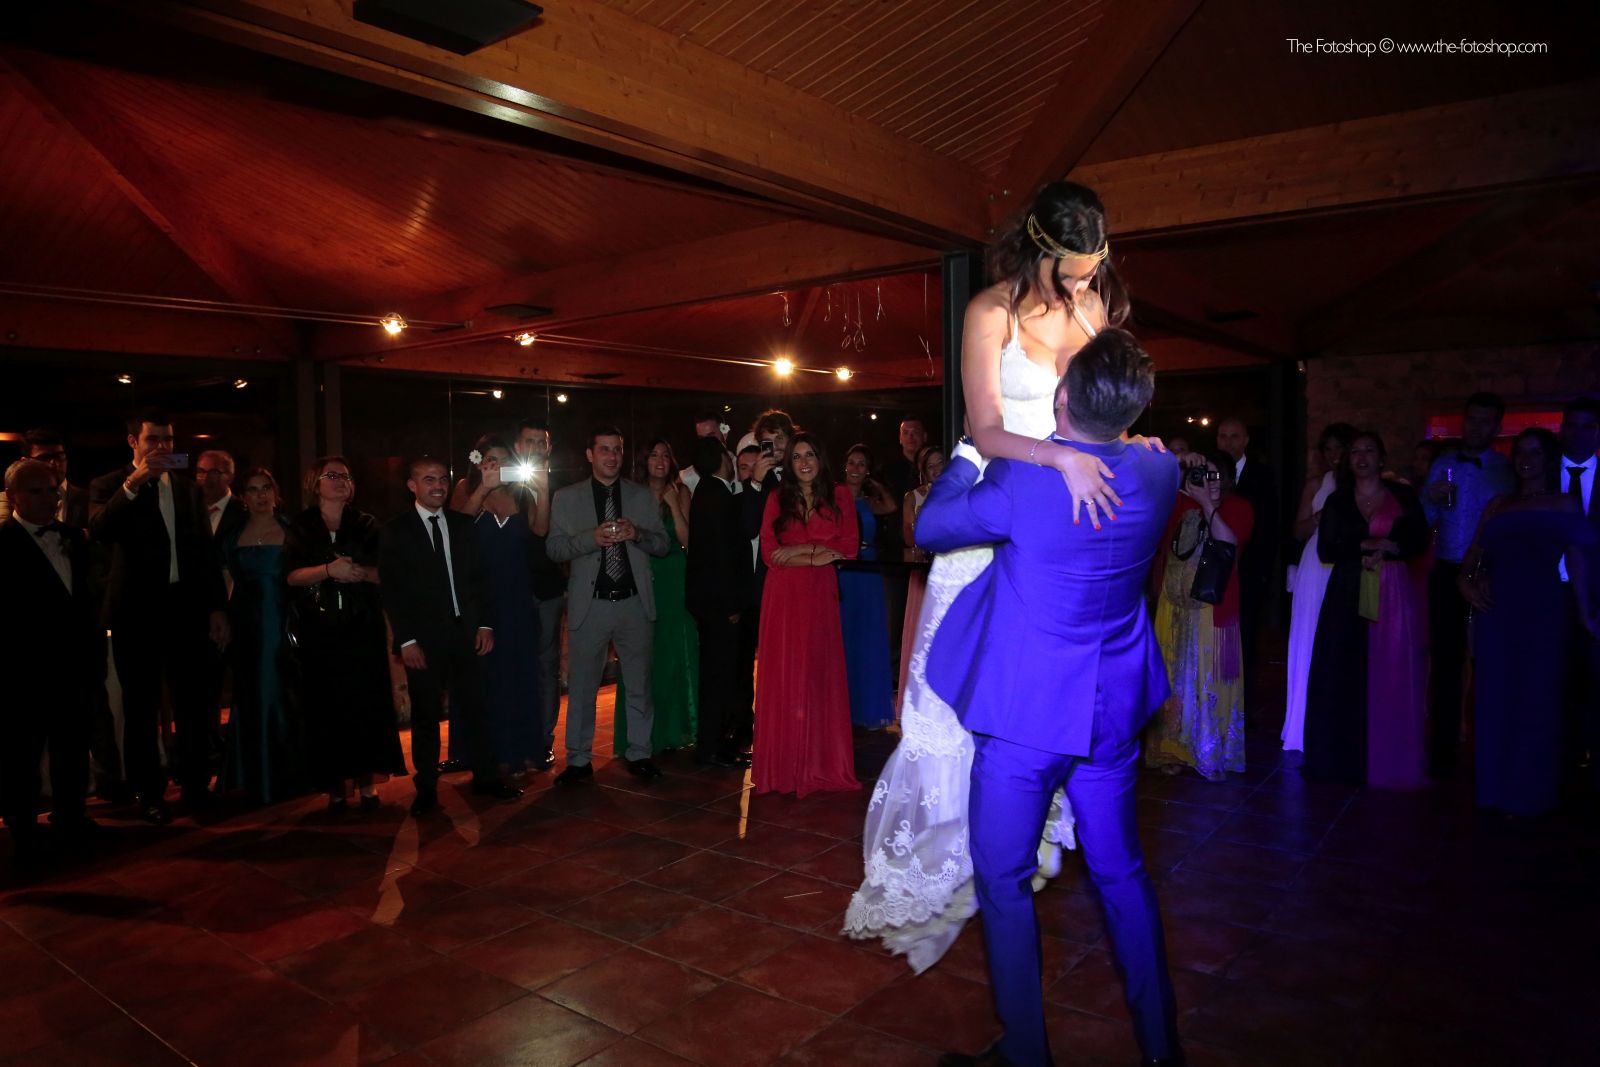 Fotografía de boda, fiesta, baile de novios